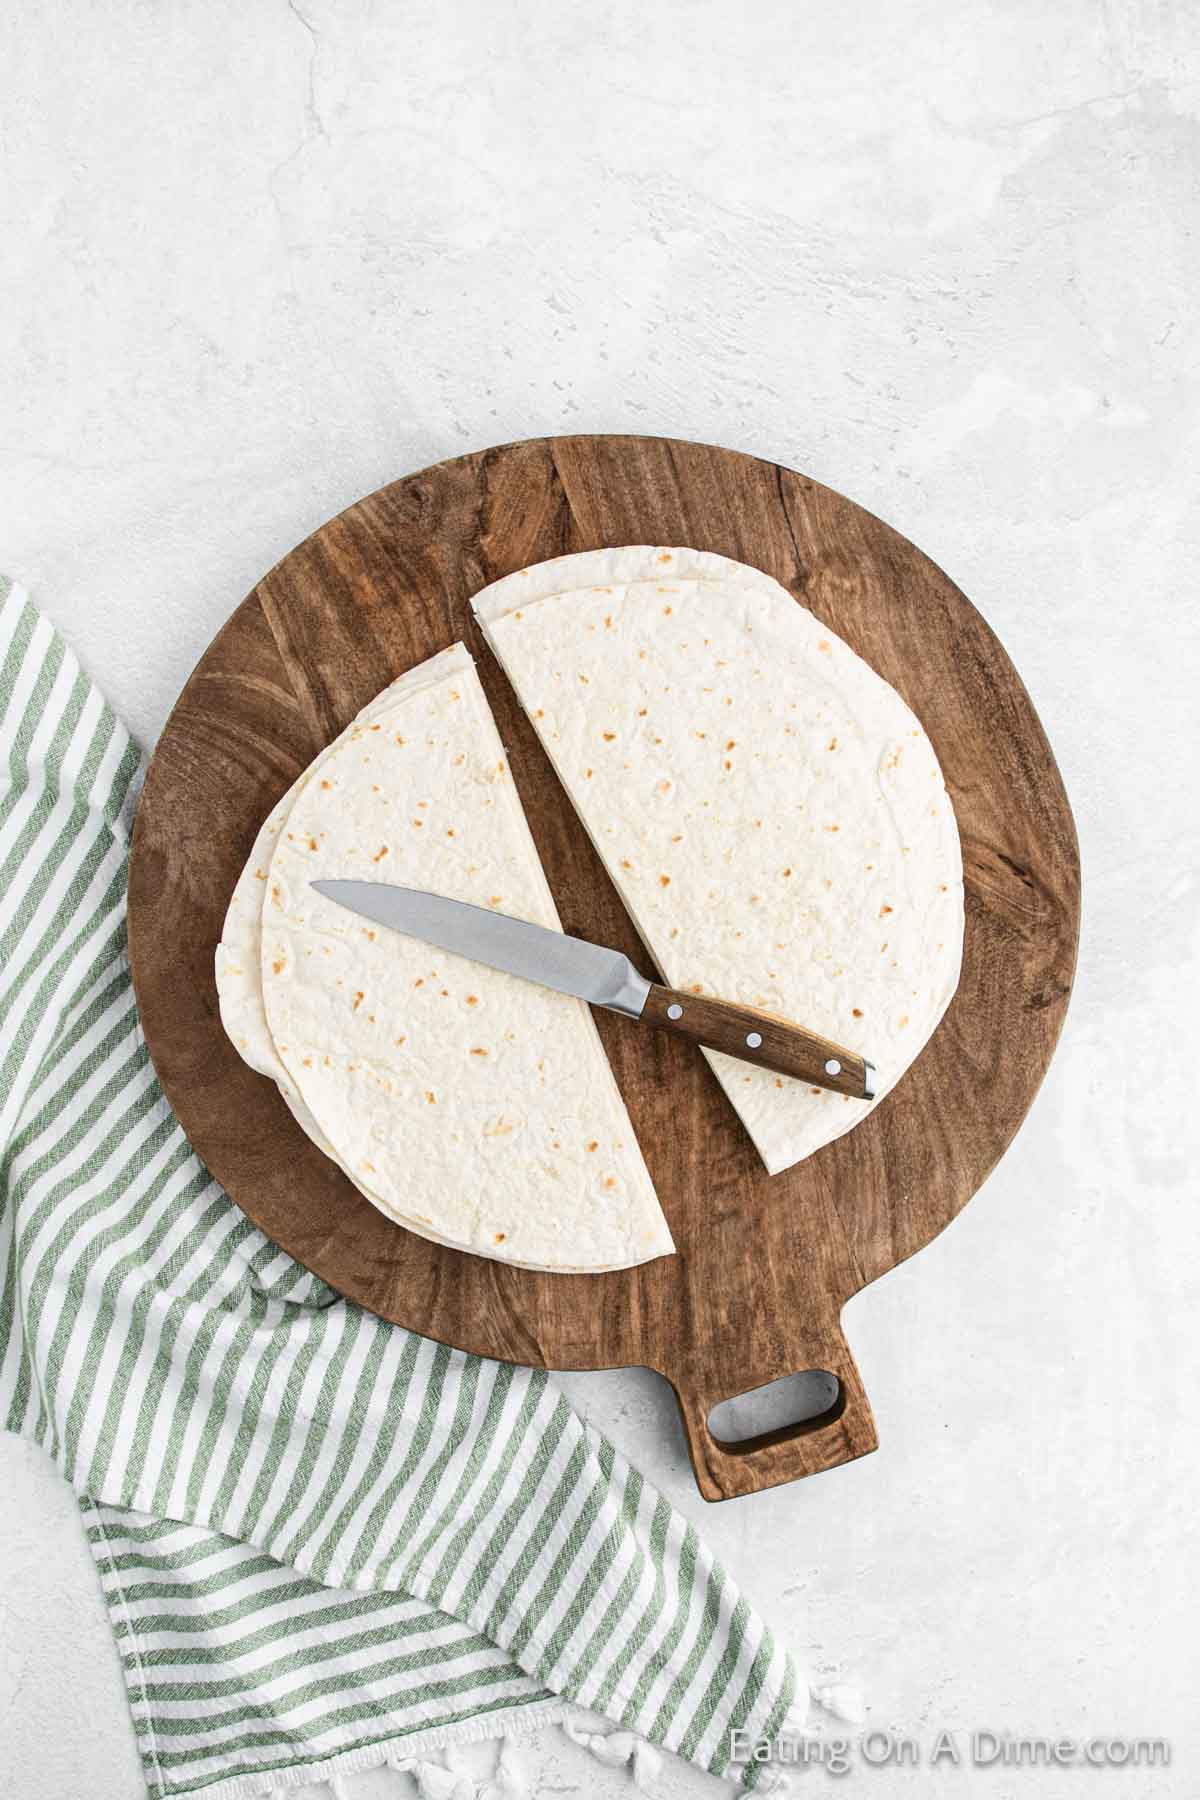 Cut tortillas in a half on a cutting board with a knife